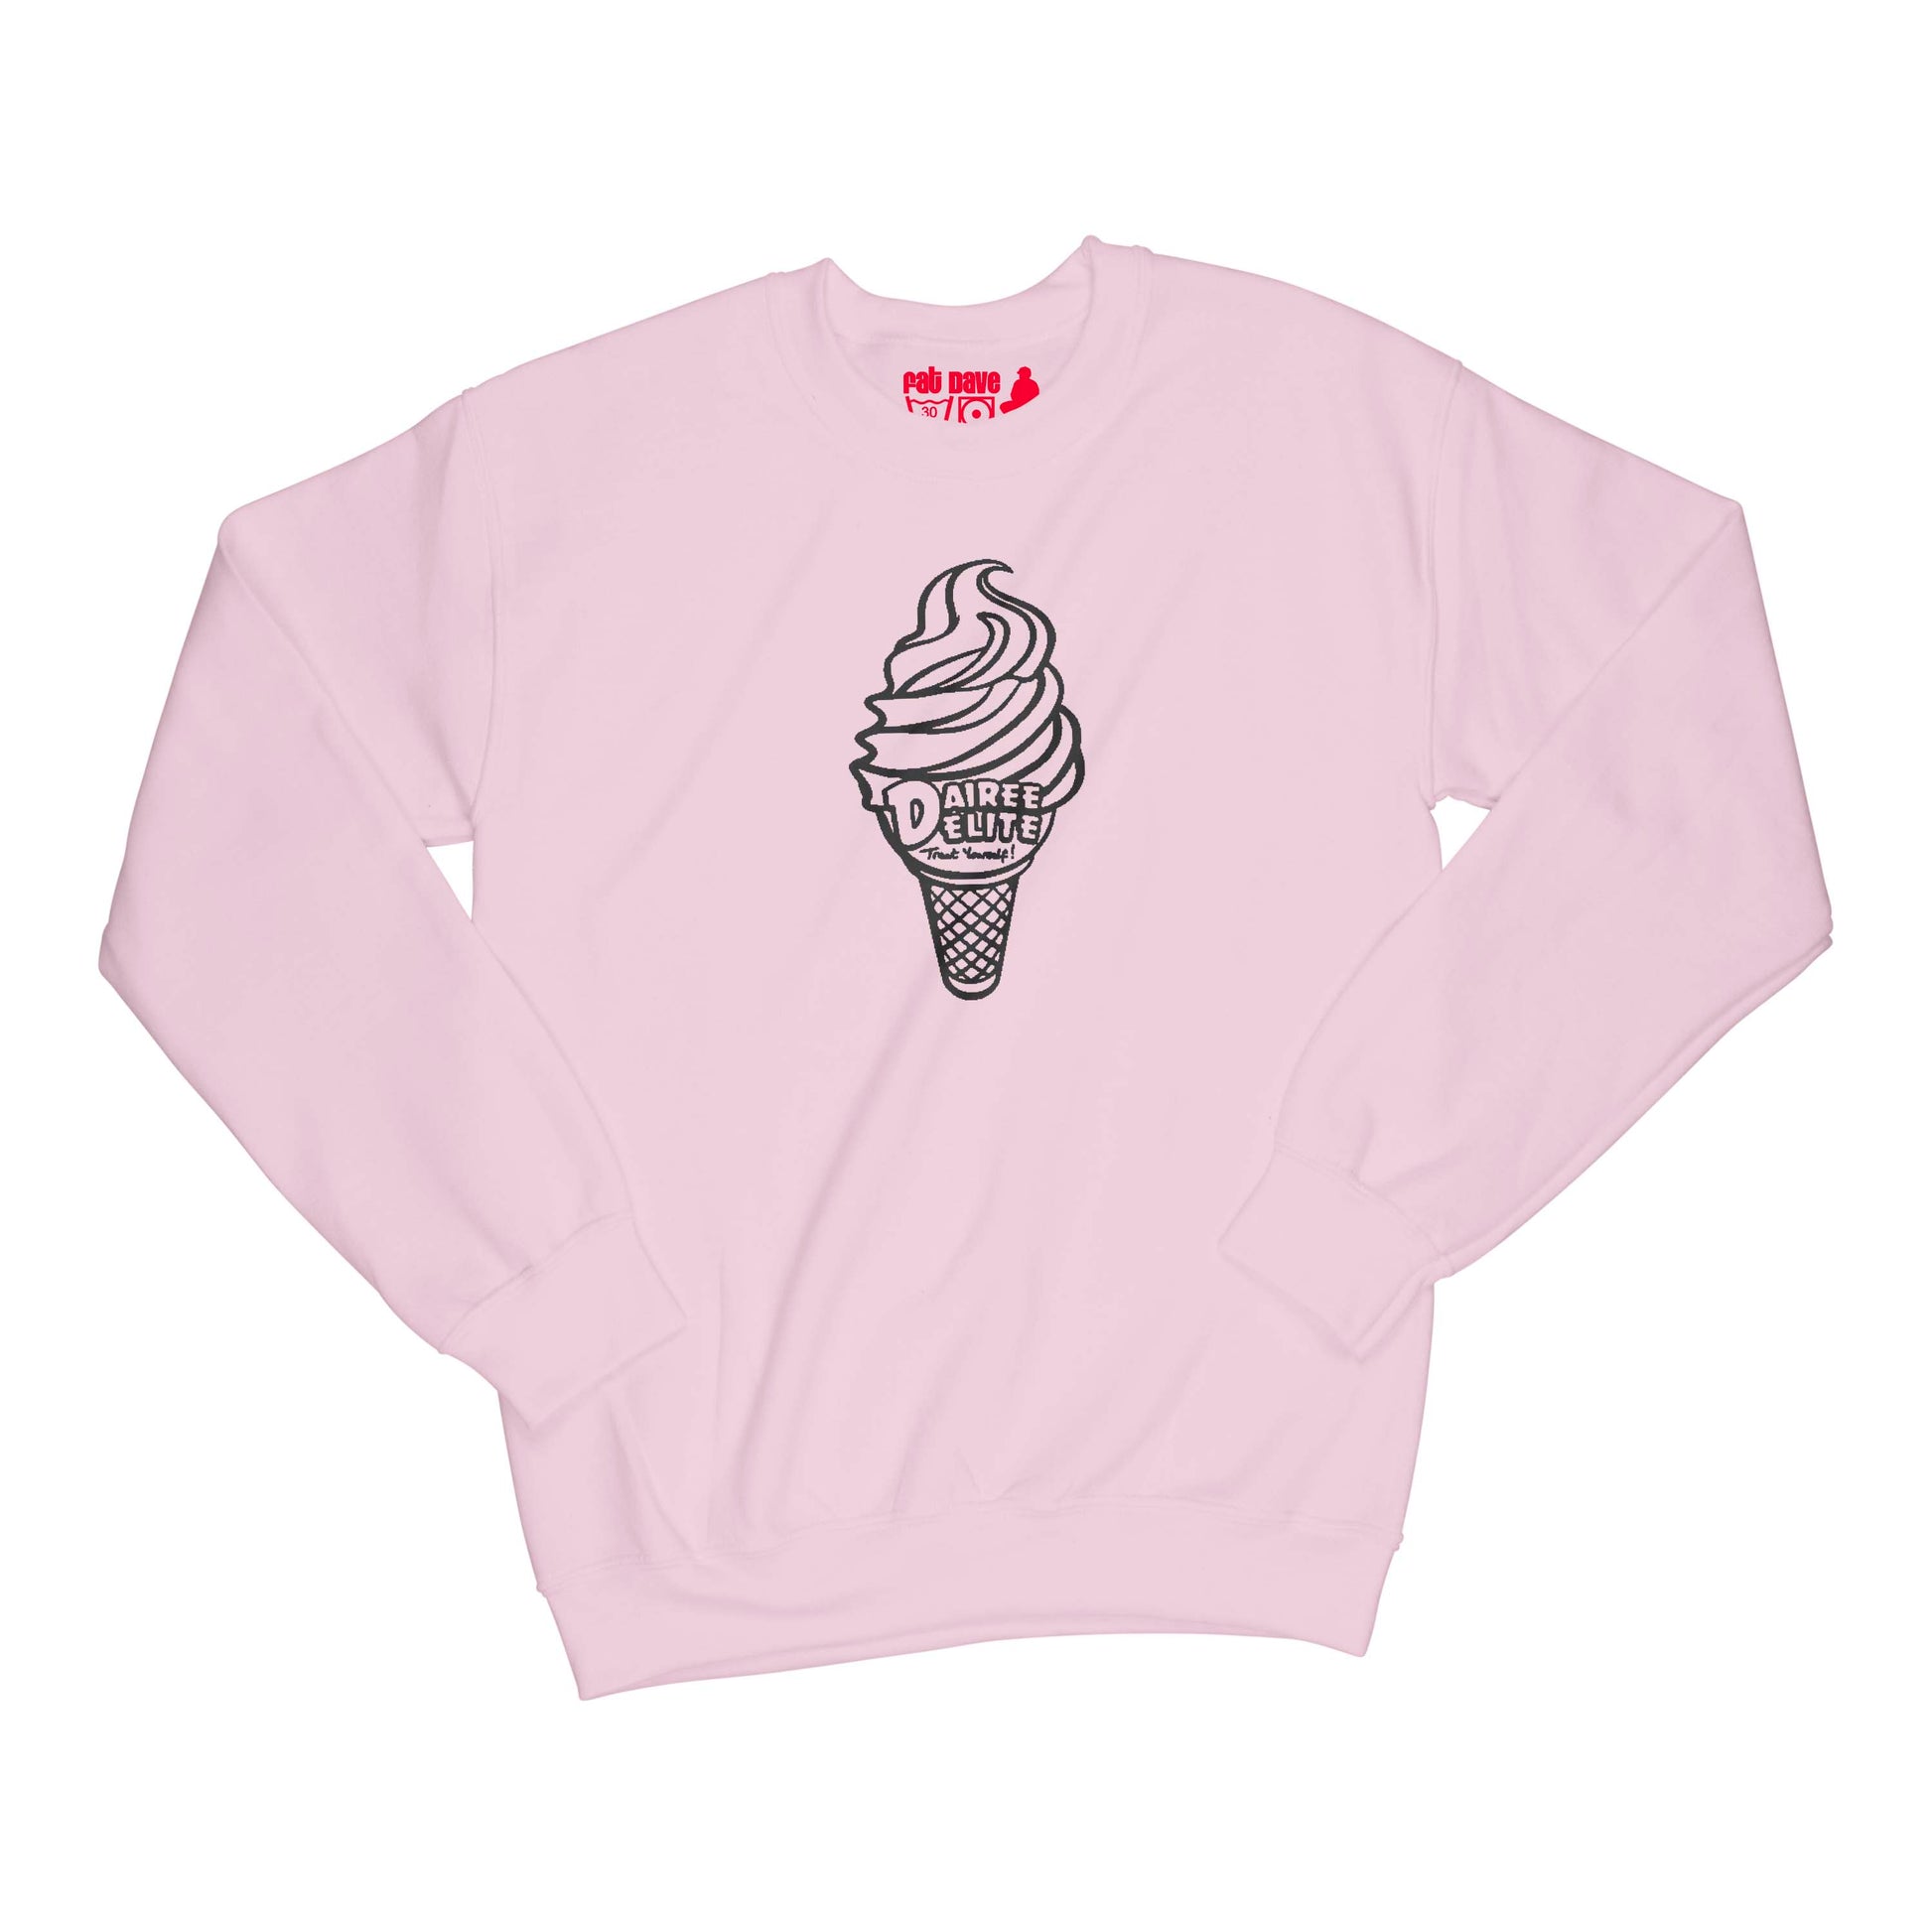 Dairee Delite 70th Anniversary Treat Yourself Cone Sweatshirt Small Light Pink